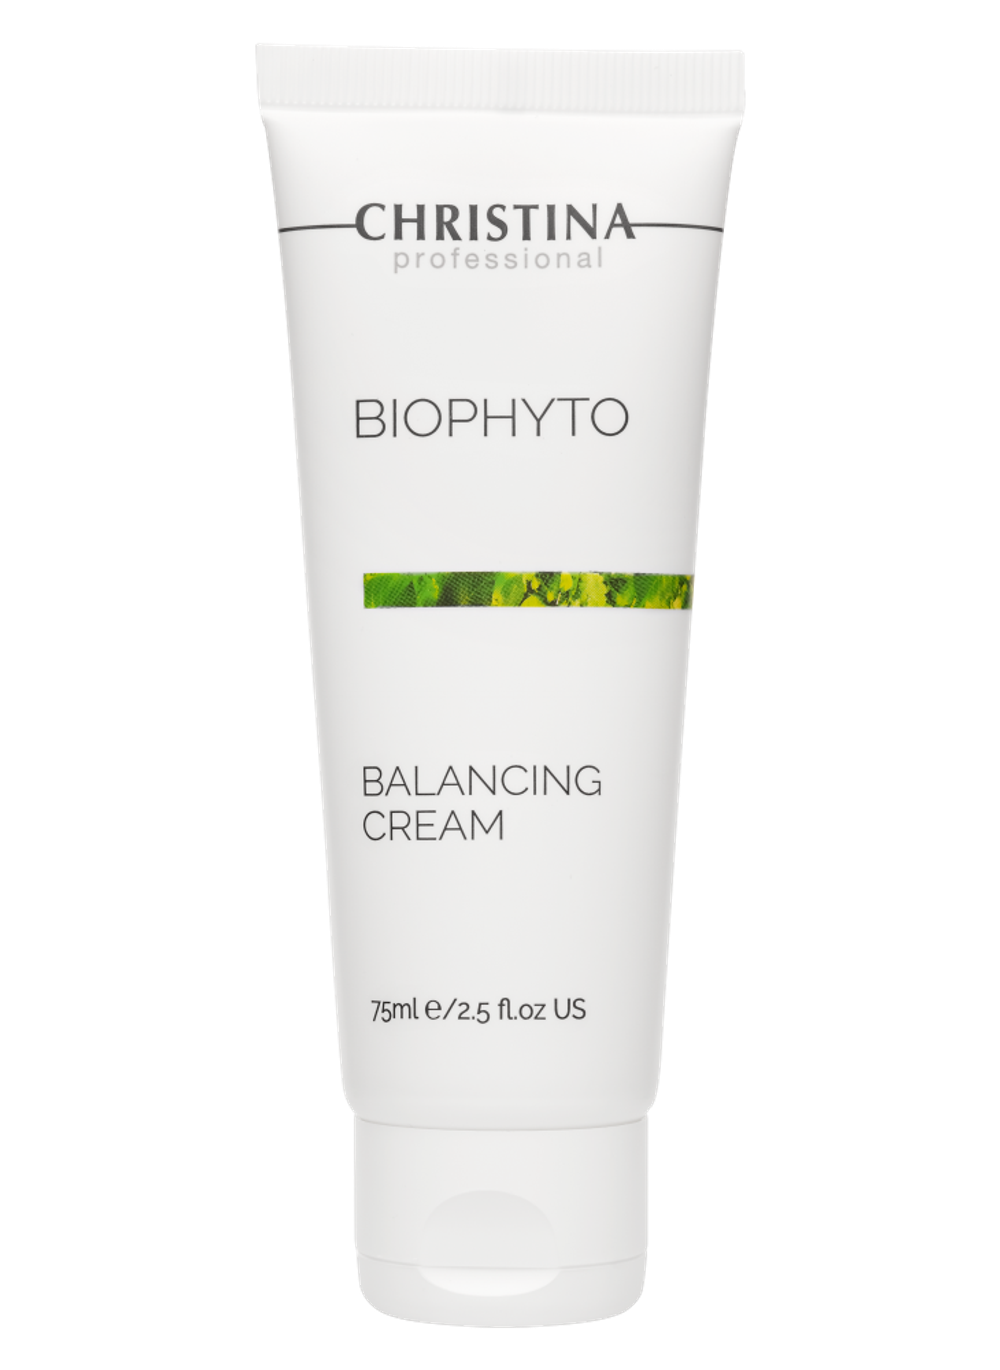 CHRISTINA Bio Phyto Balancing Cream